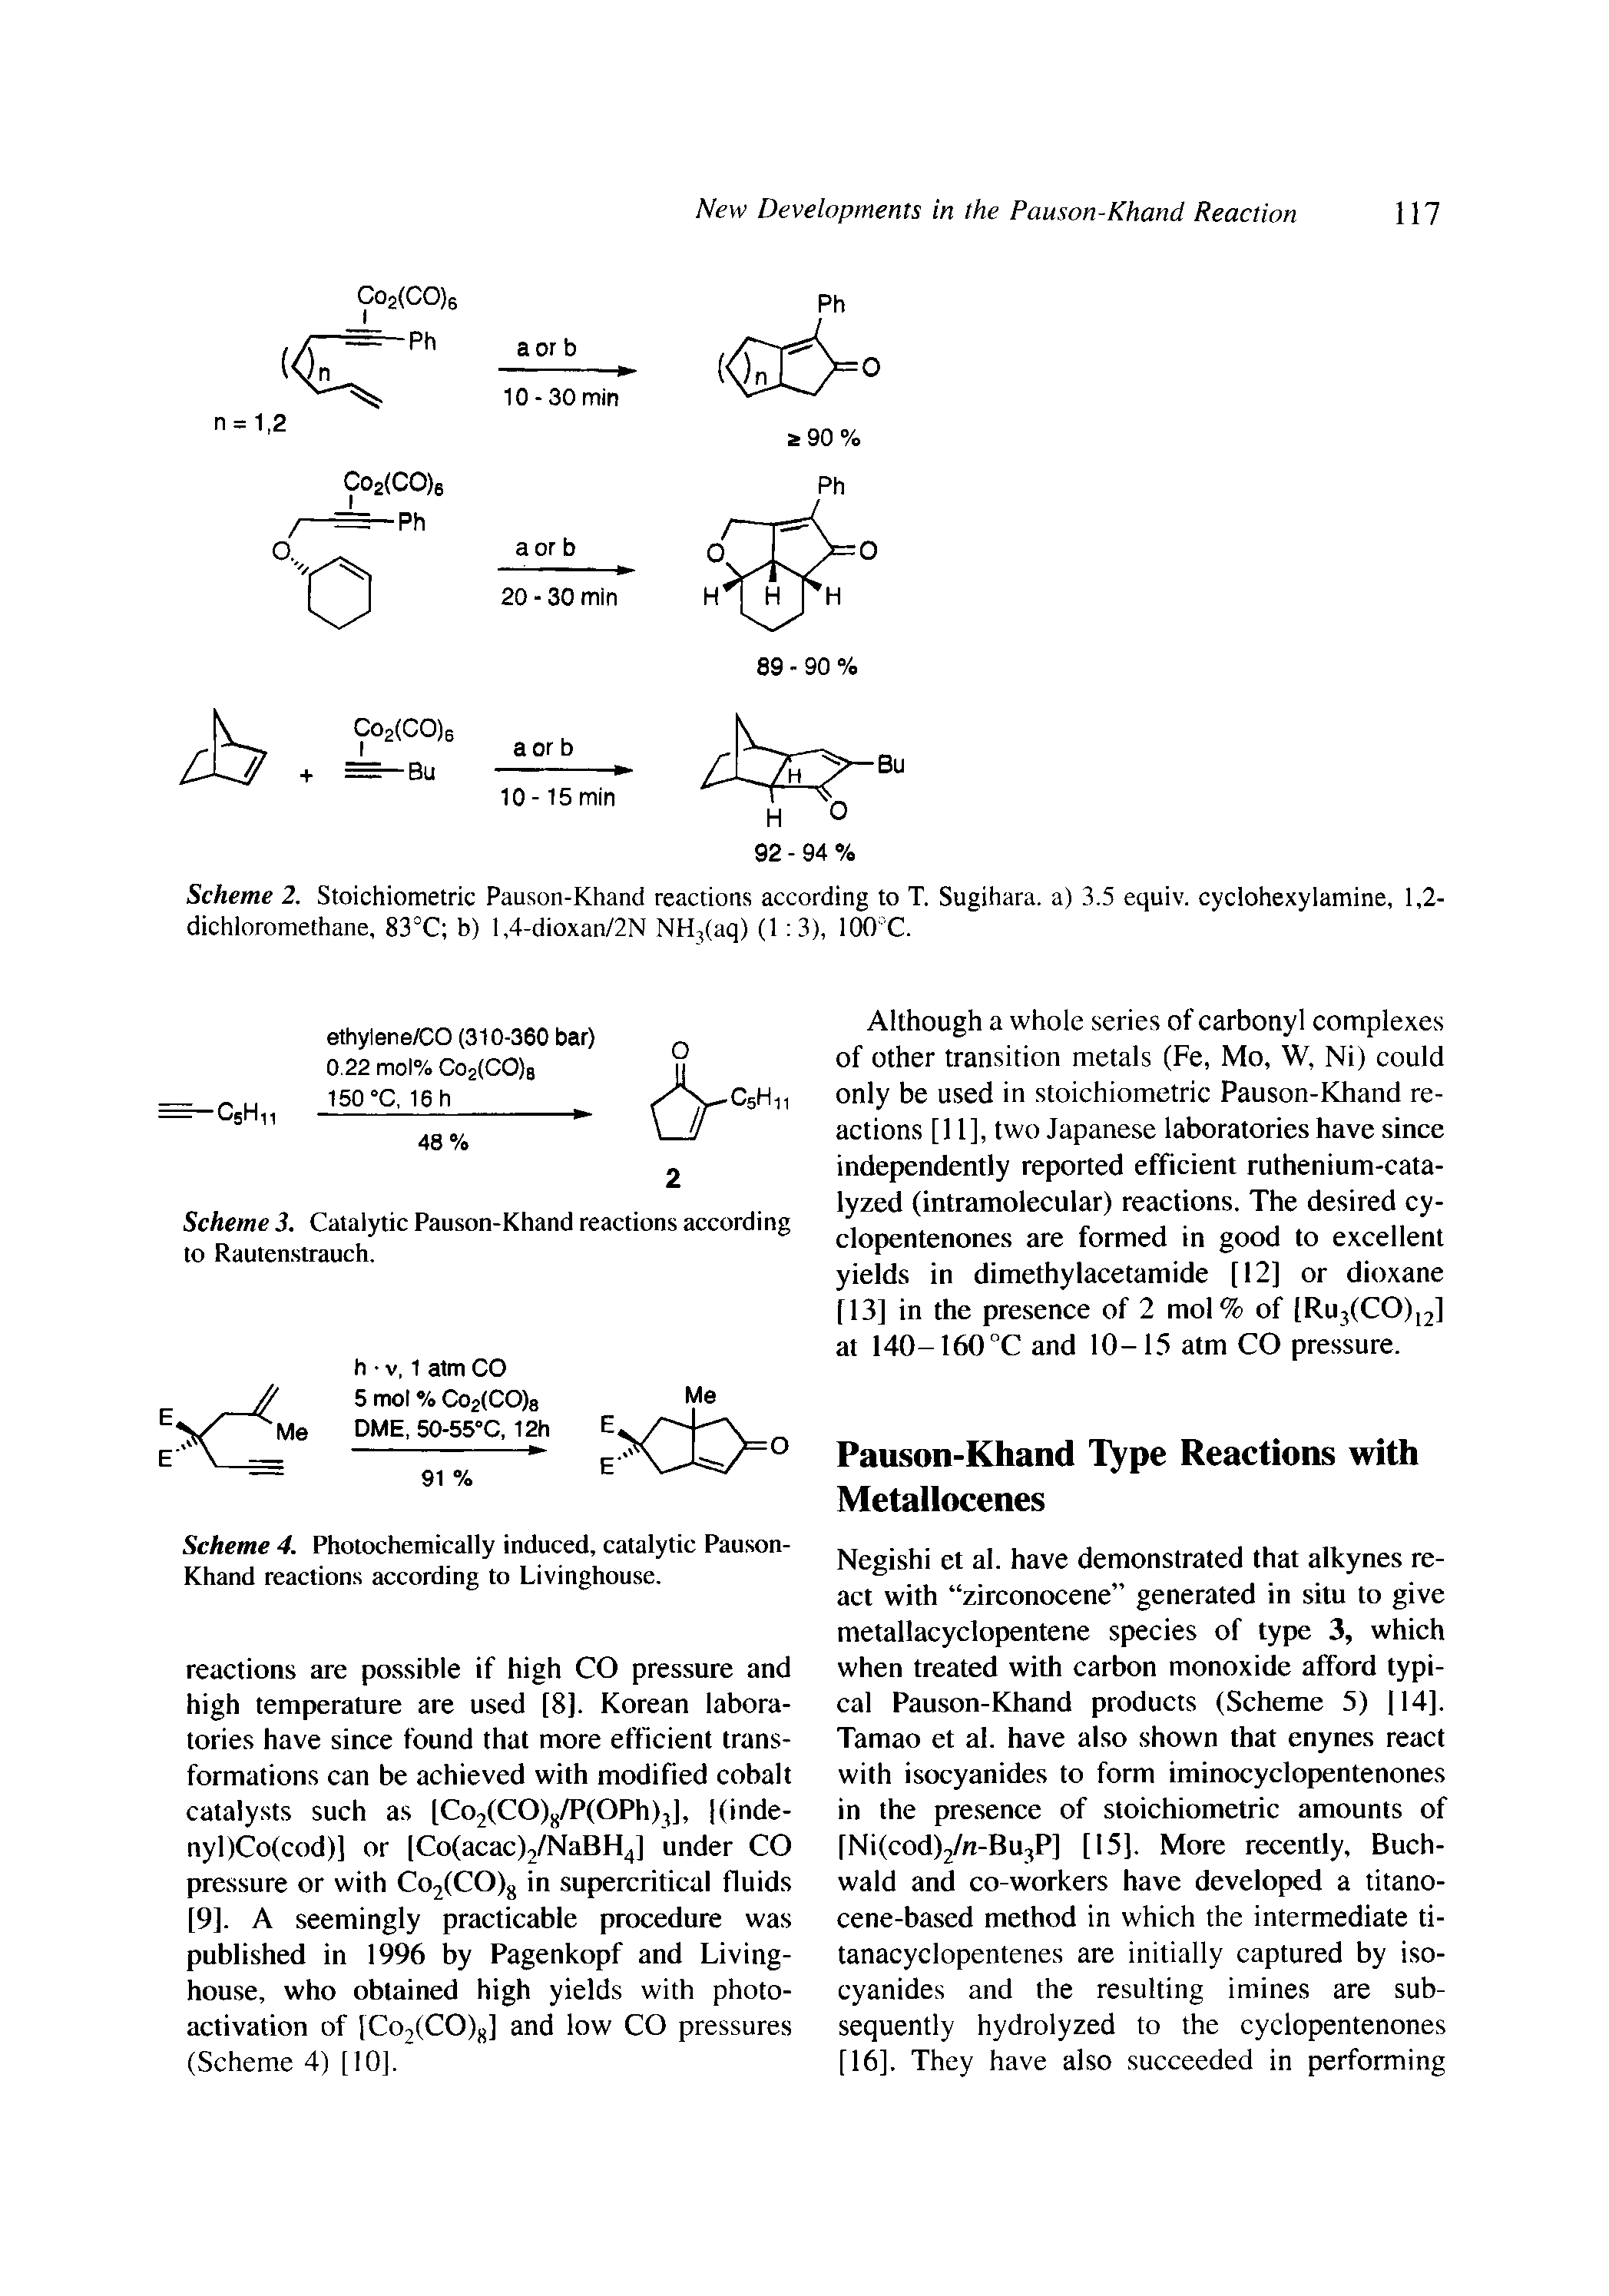 Scheme 2. Stoichiometric Pauson-Khand reactions according to T. Sugihara. a) 3.5 equiv. cyclohexylamine, 1,2-dichloromethane, 83°C b) 1,4-dioxan/2N NHj(aq) (1 3), lOO C.